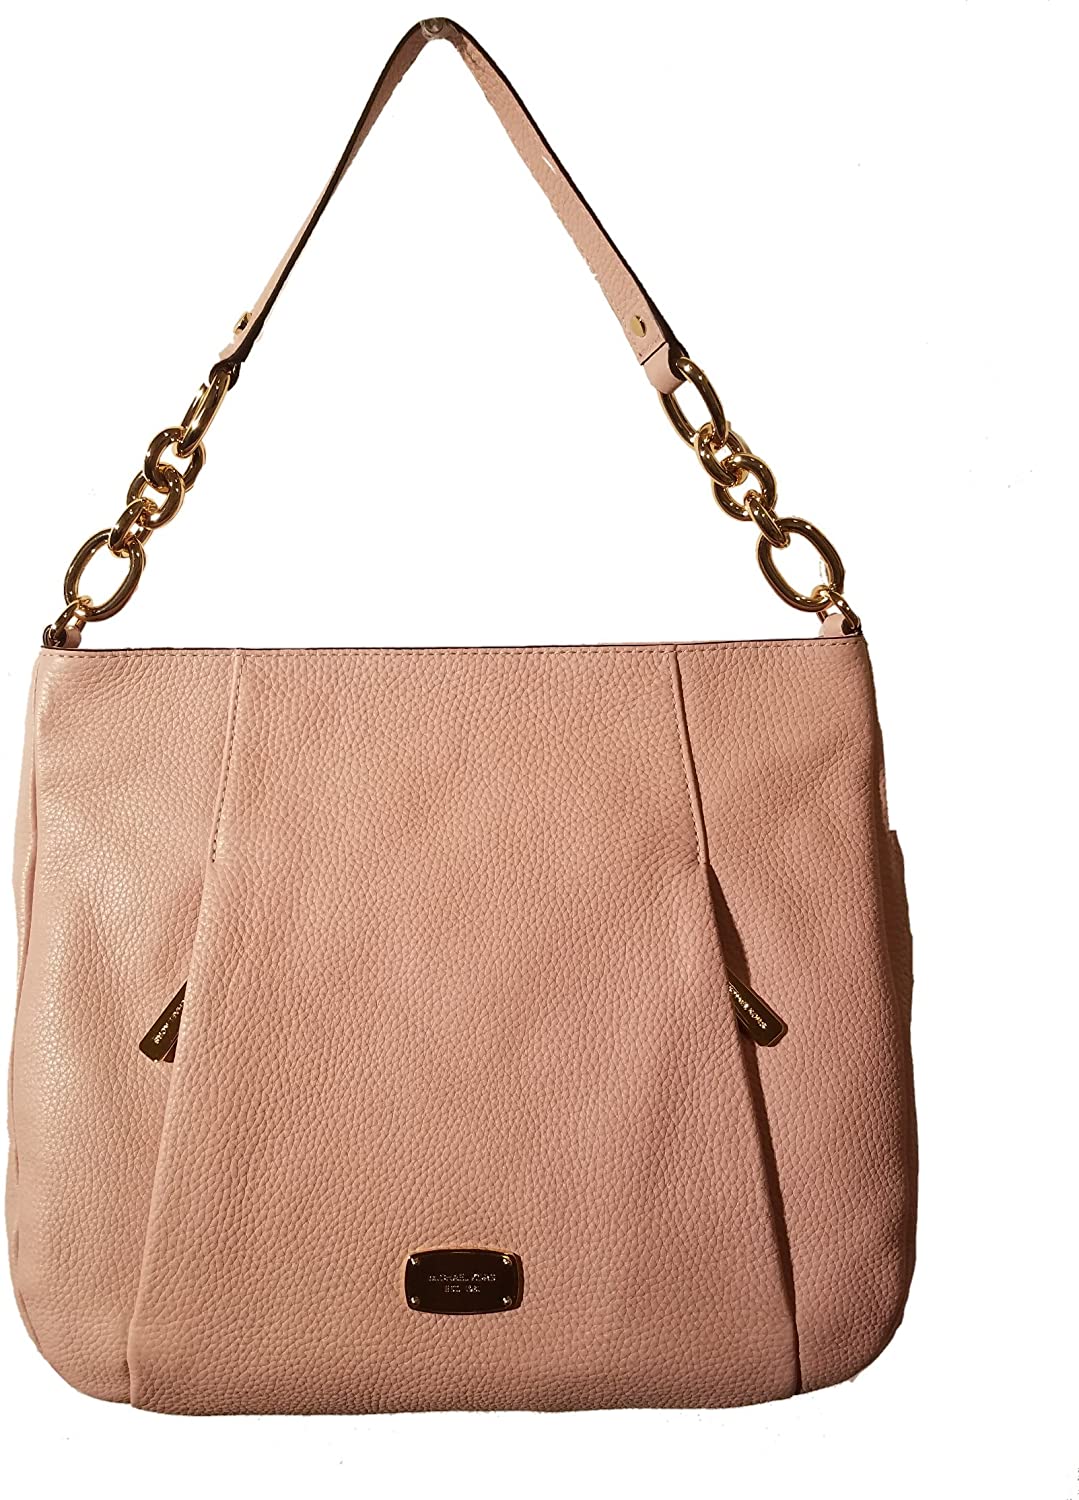 Price:$189.00 Michael Kors Hallie Bag Blossom Leather Large (35S6GEQL3L)  Handbags   